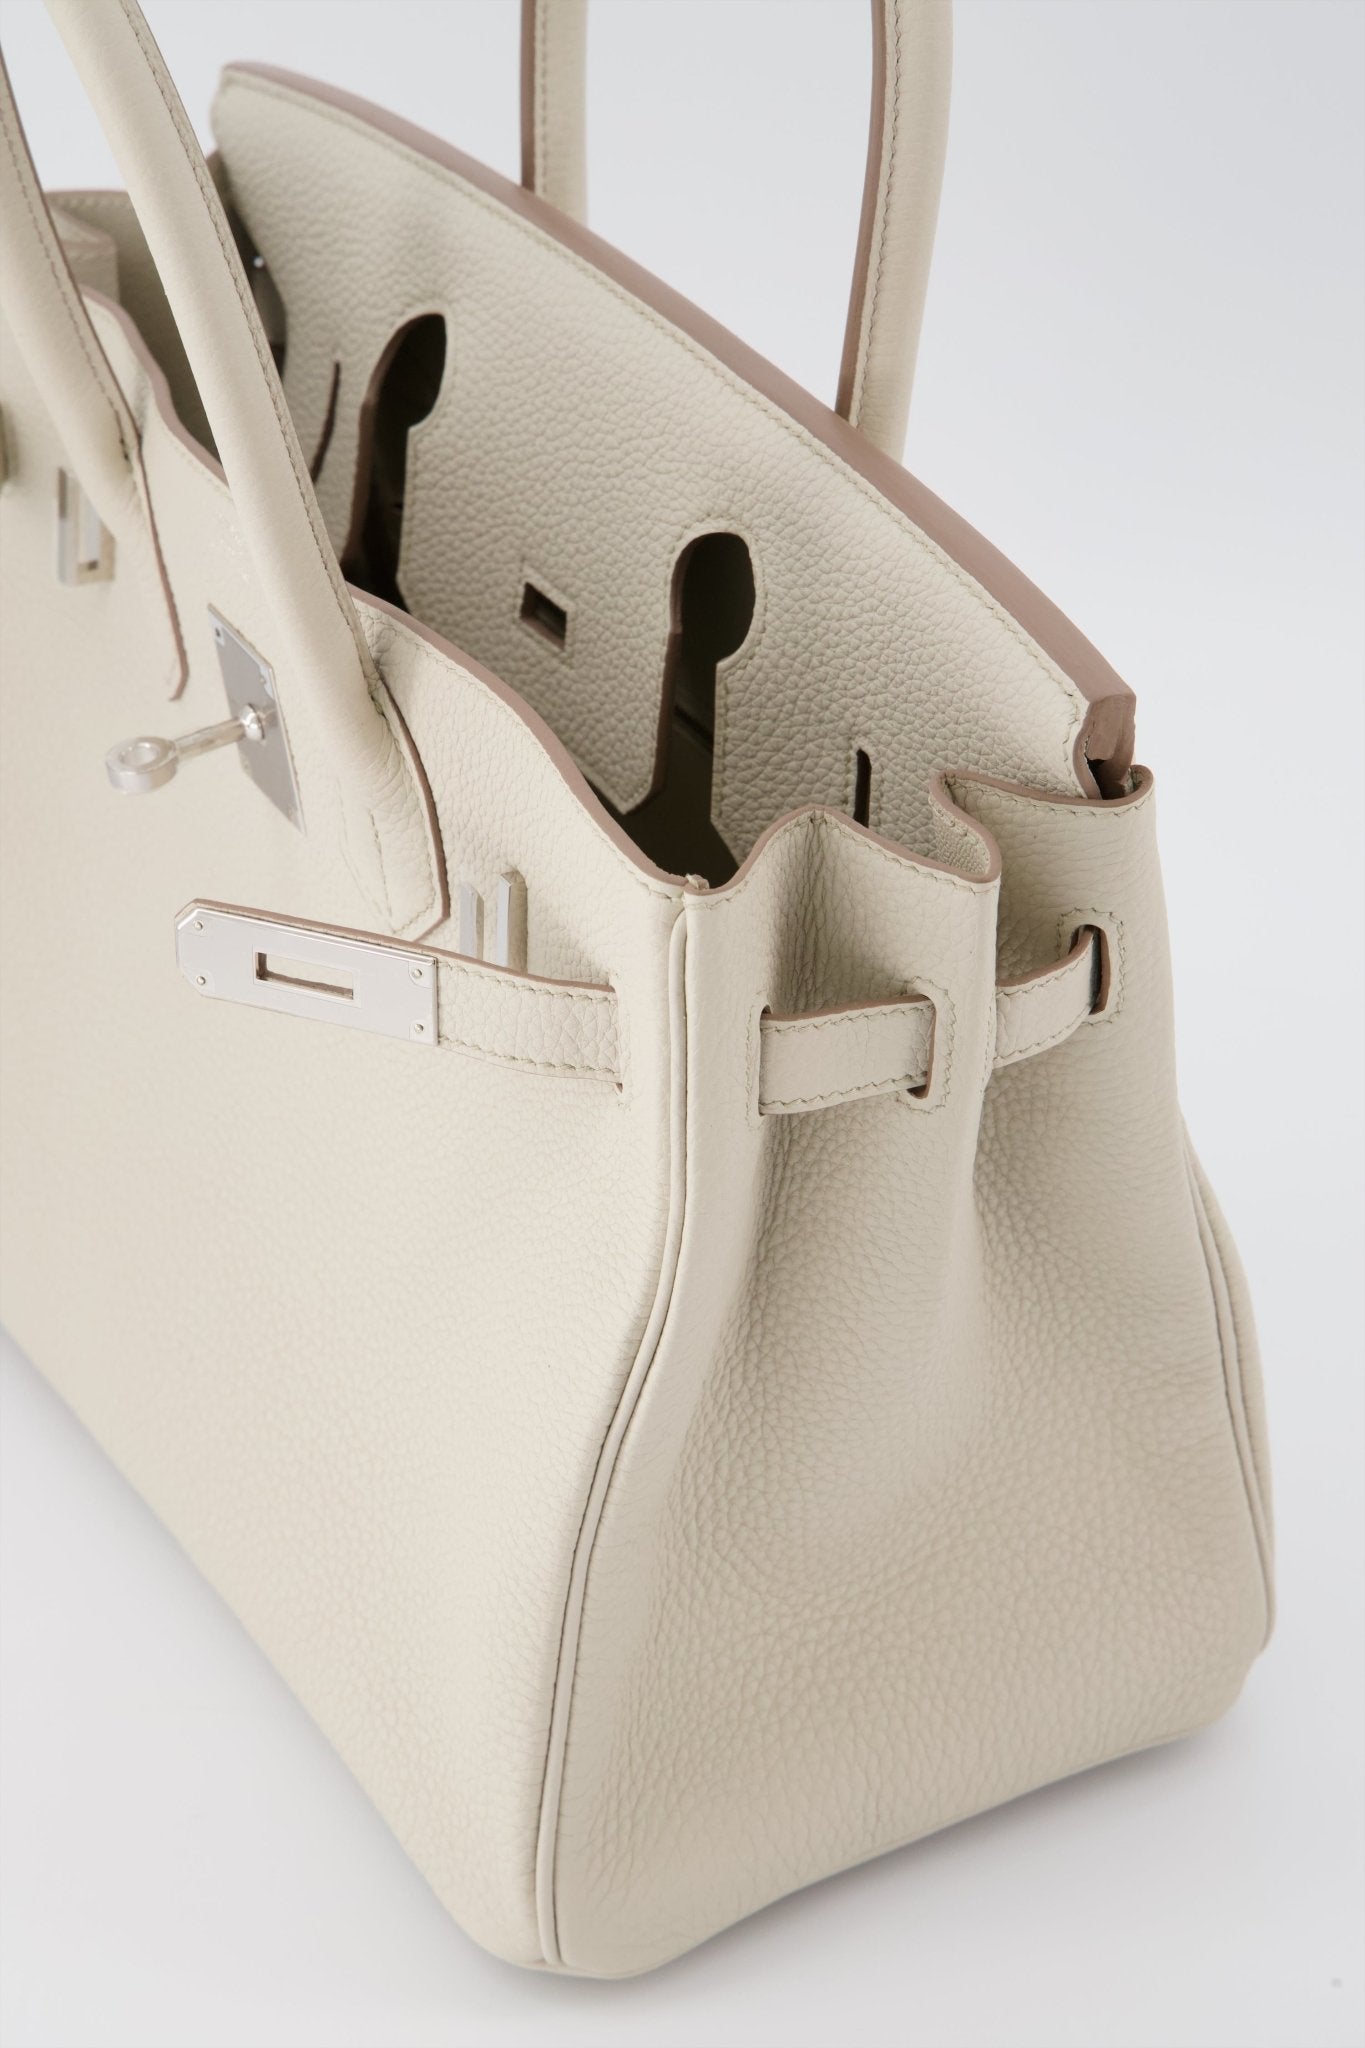 Hermès Beton Birkin 30cm of Togo Leather with Gold Hardware, Handbags and  Accessories Online, 2019